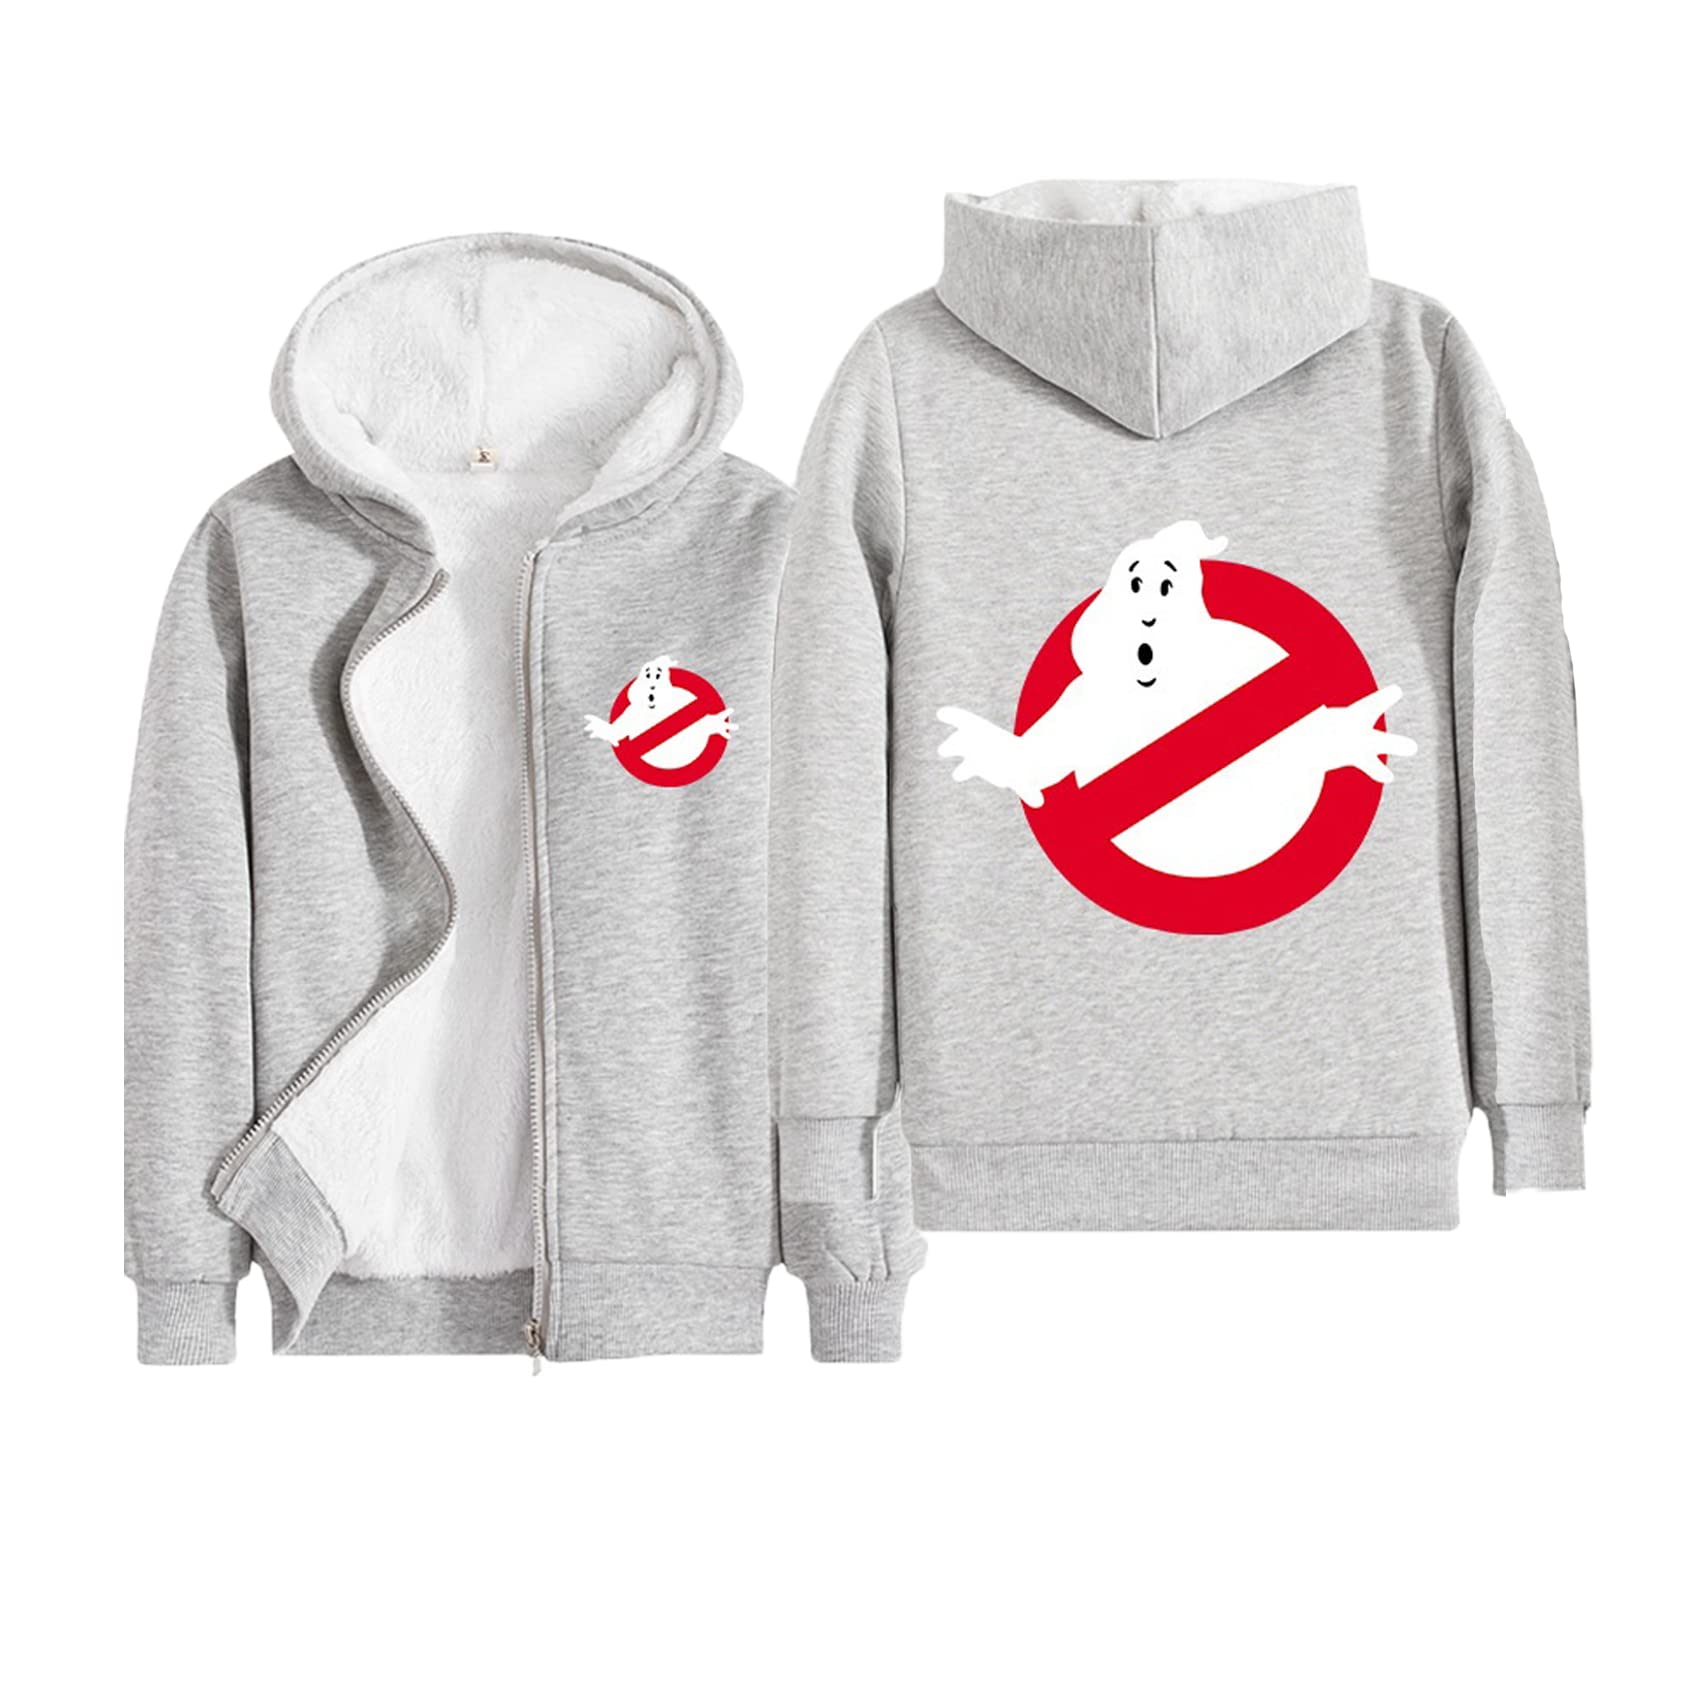 OYLIE Ghostbusters Graphic Casual Jacket with hood-Kids,Long Sleeve Fleece Full Zip Coat Cozy Outerwear